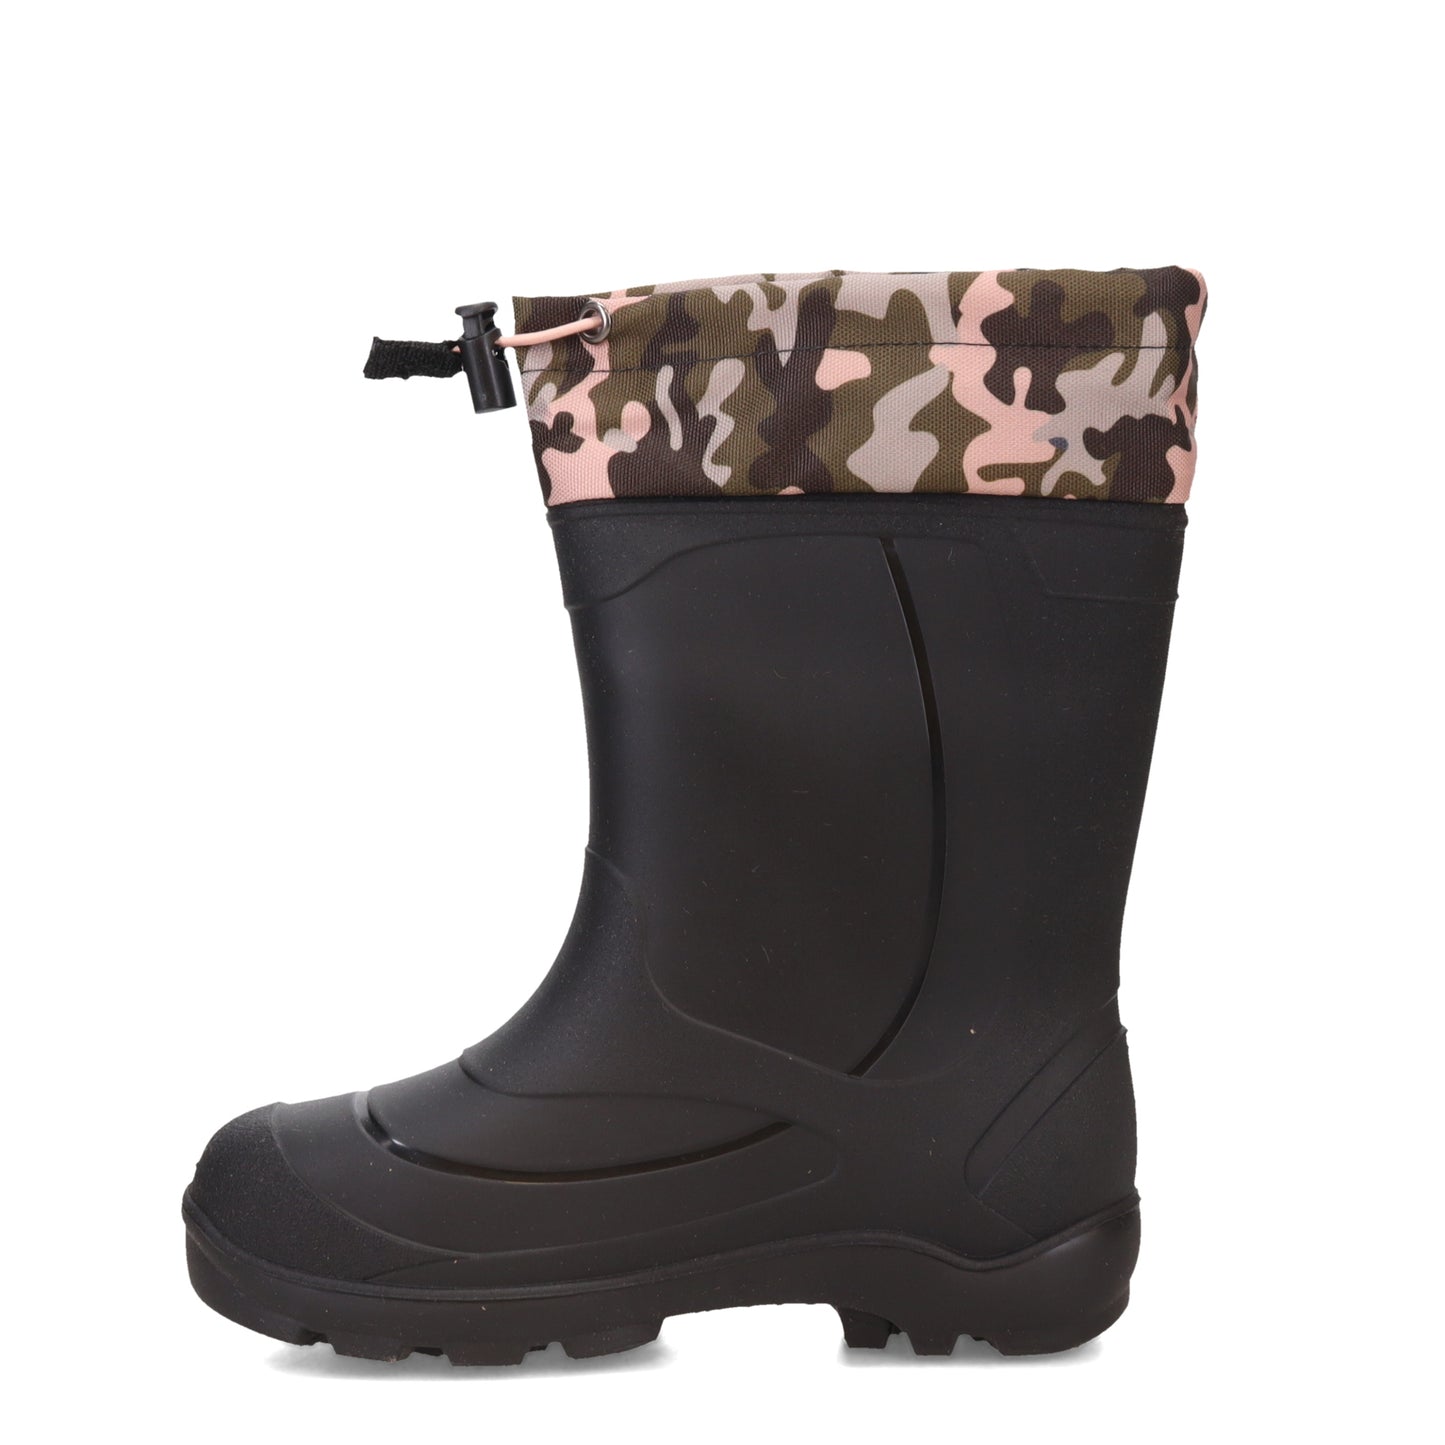 Peltz Shoes  Girl's Kamik Snowbuster 2 Snow Boot - Toddler & Little Kid Black / Pink Camo AK8212-LPC